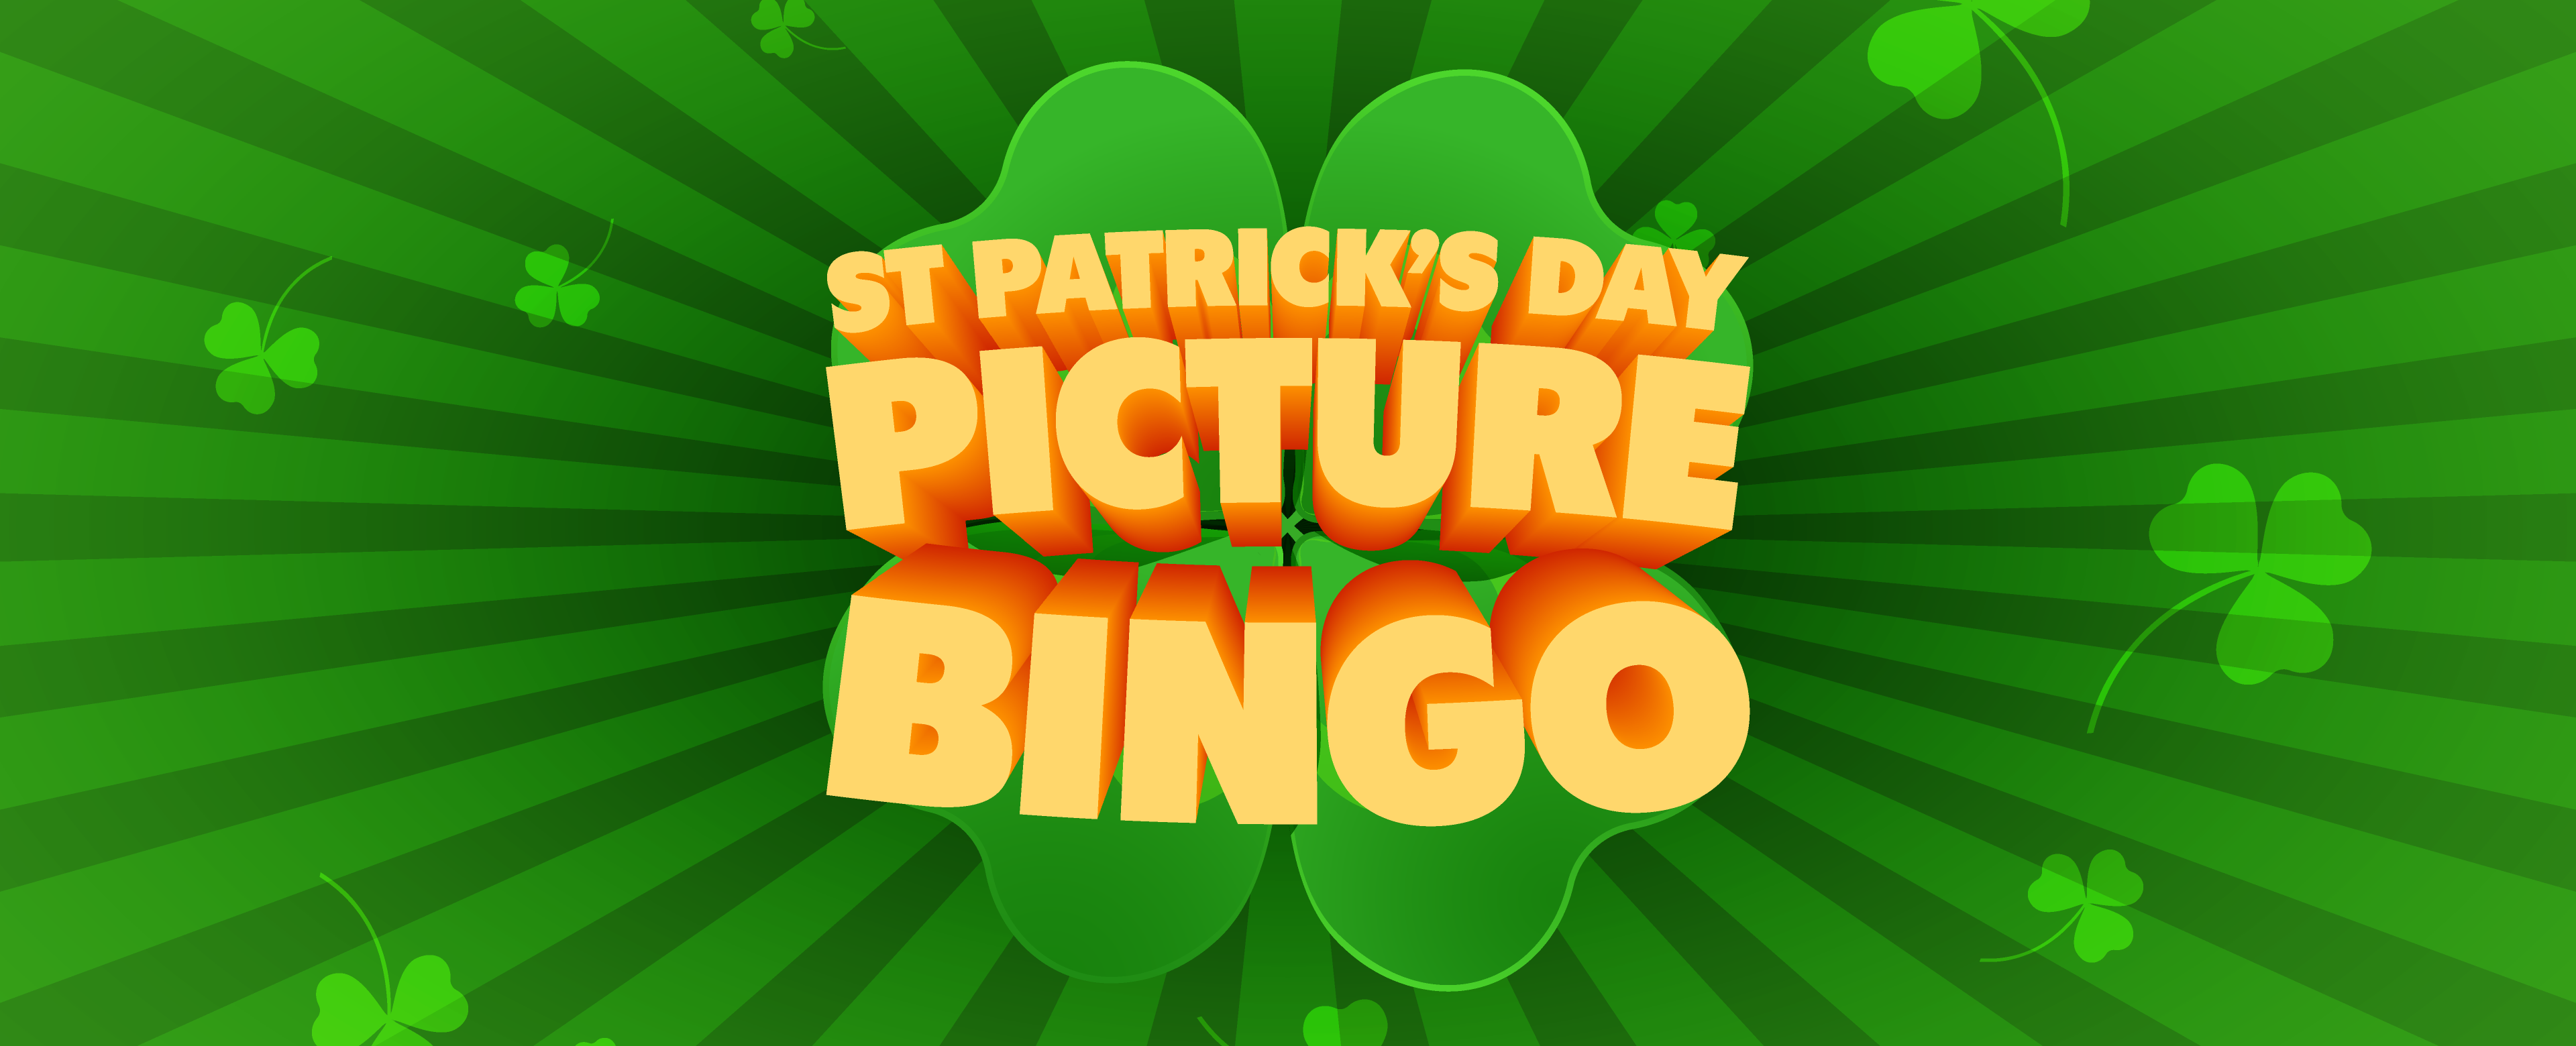 st. patricks day picture bingo